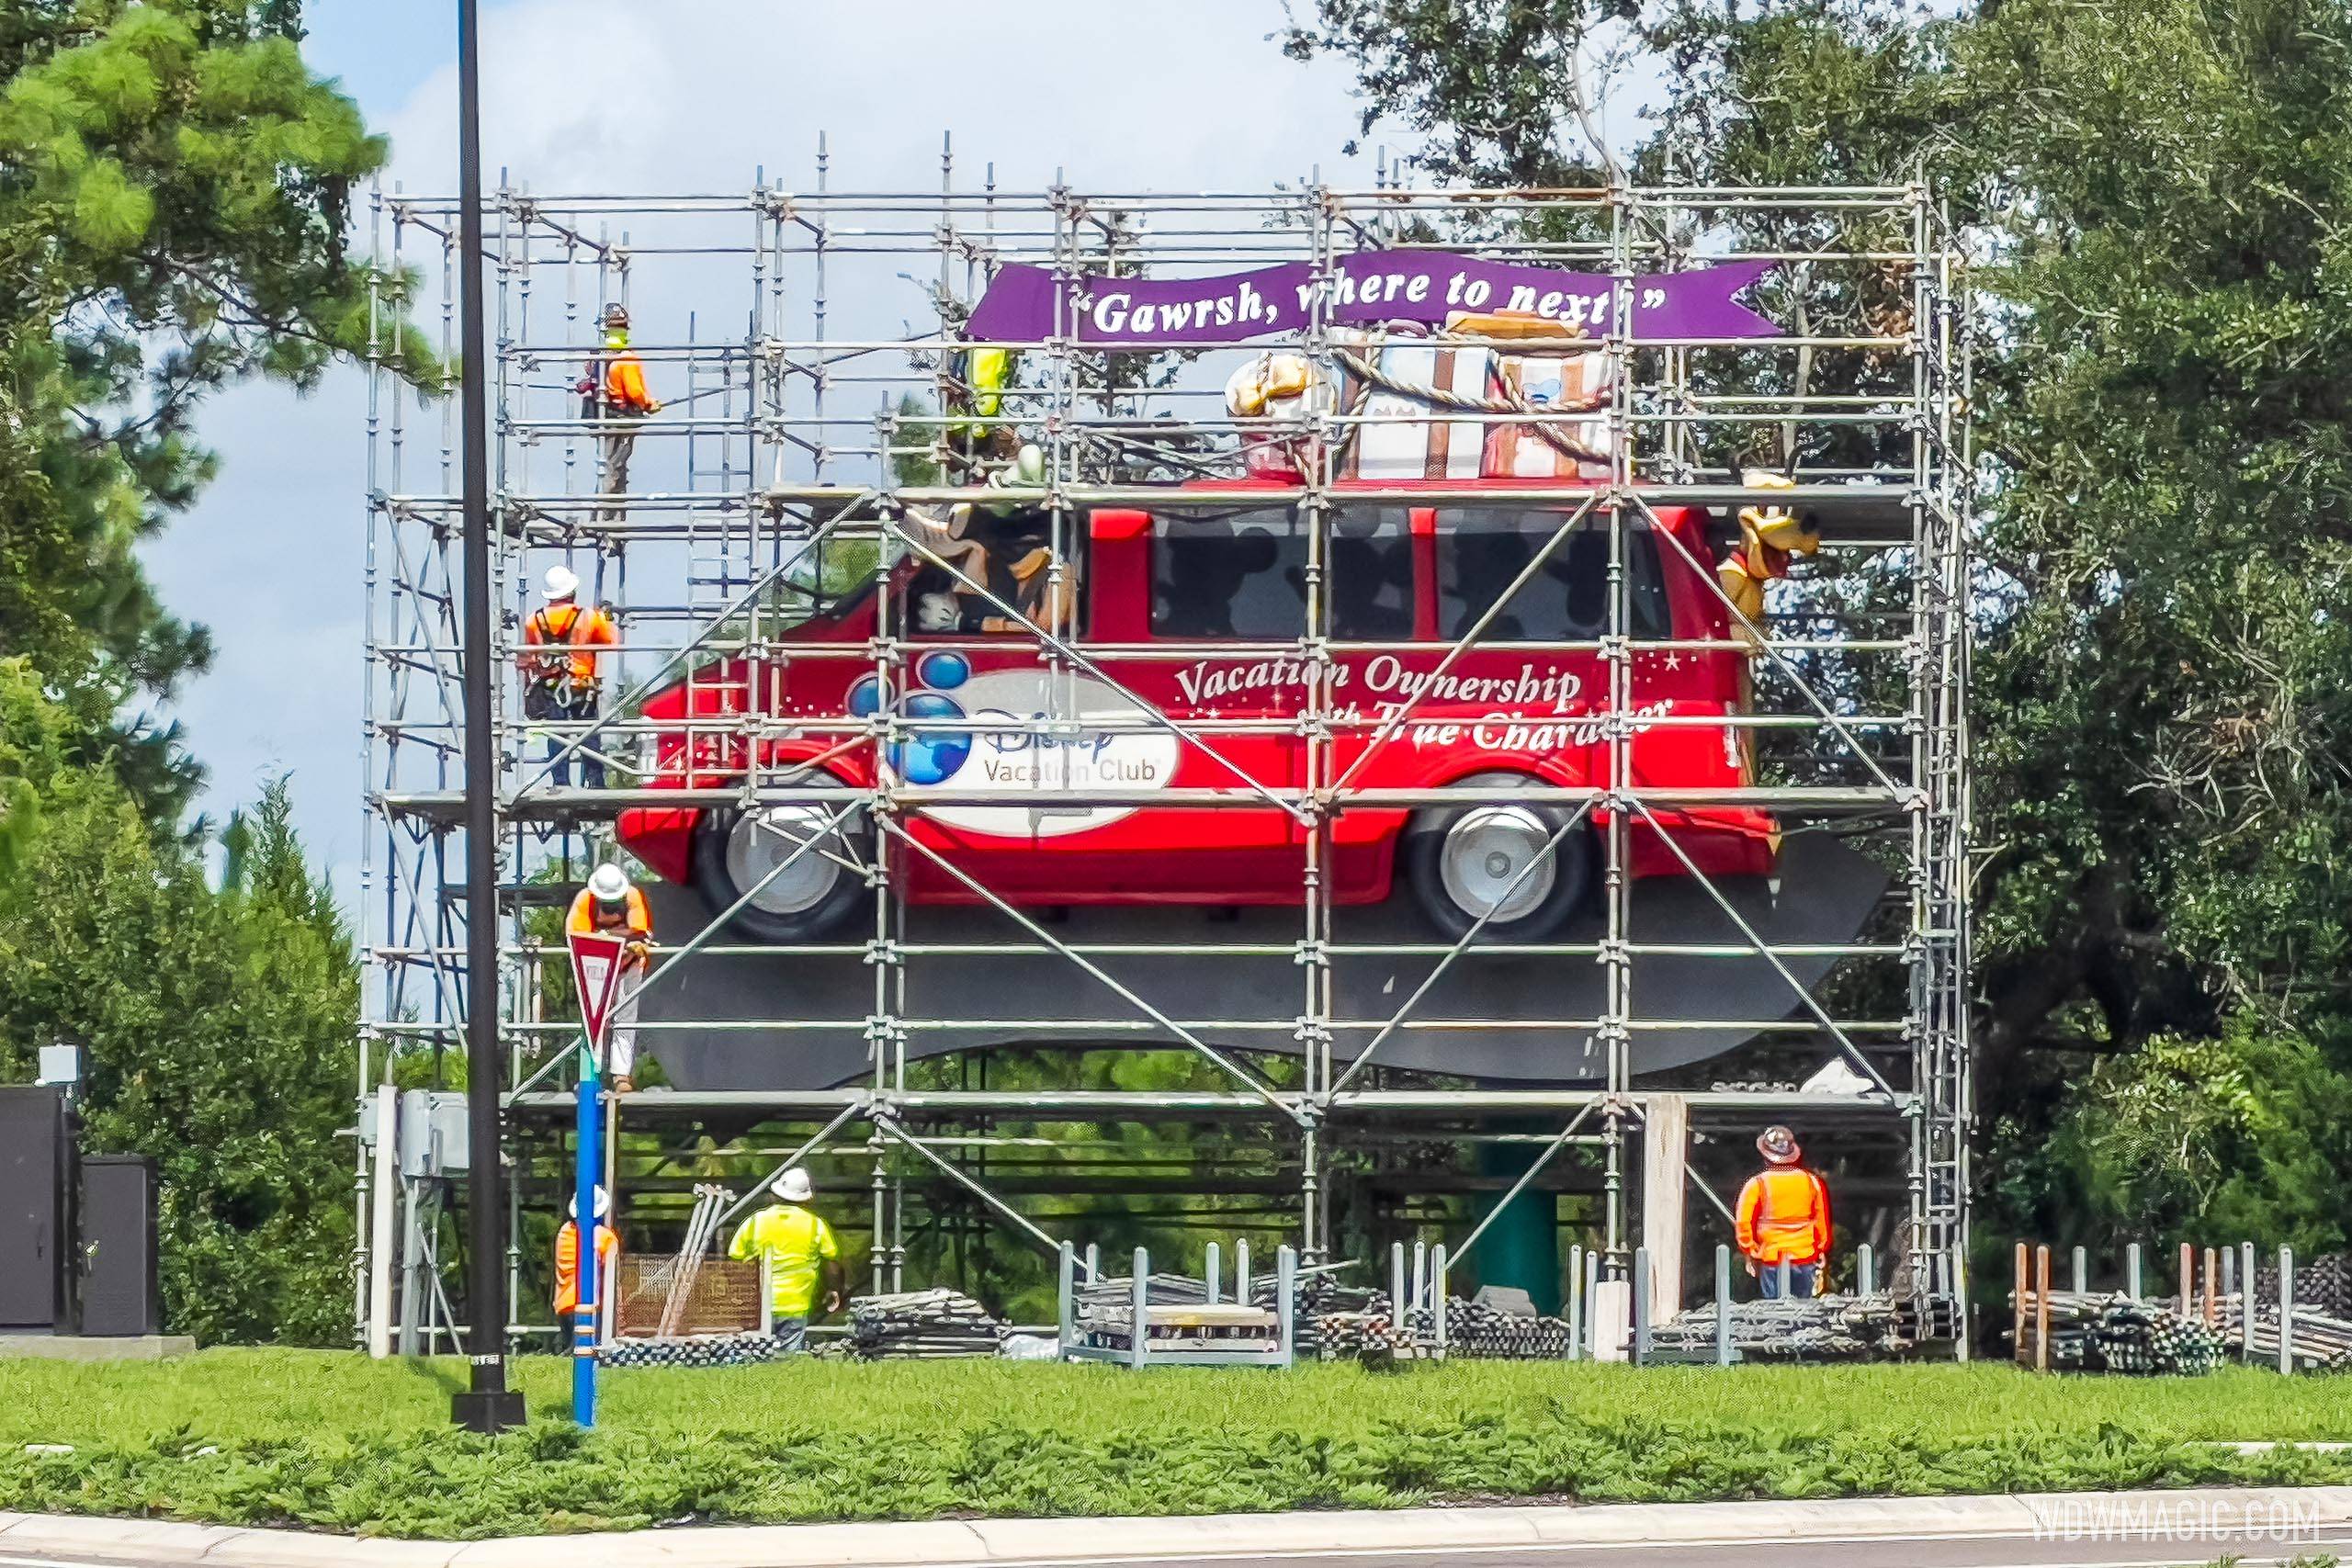 Disney Vacation Club billboard refurbishment - July 26 2022